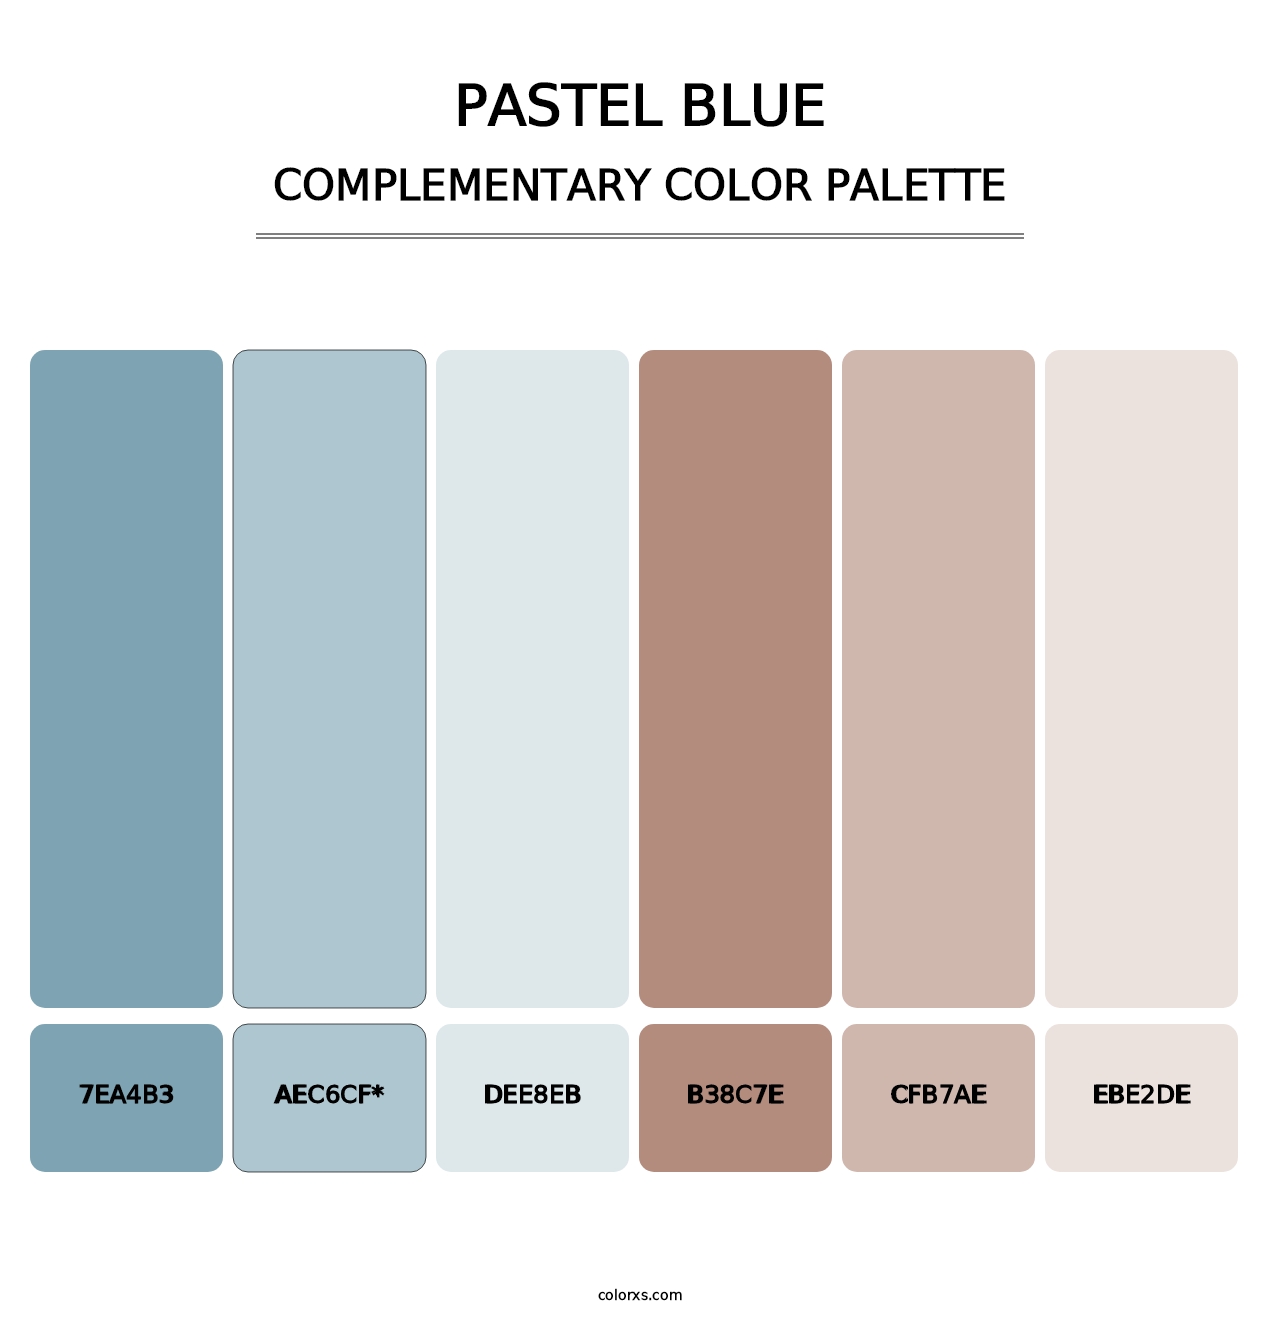 Pastel Blue - Complementary Color Palette